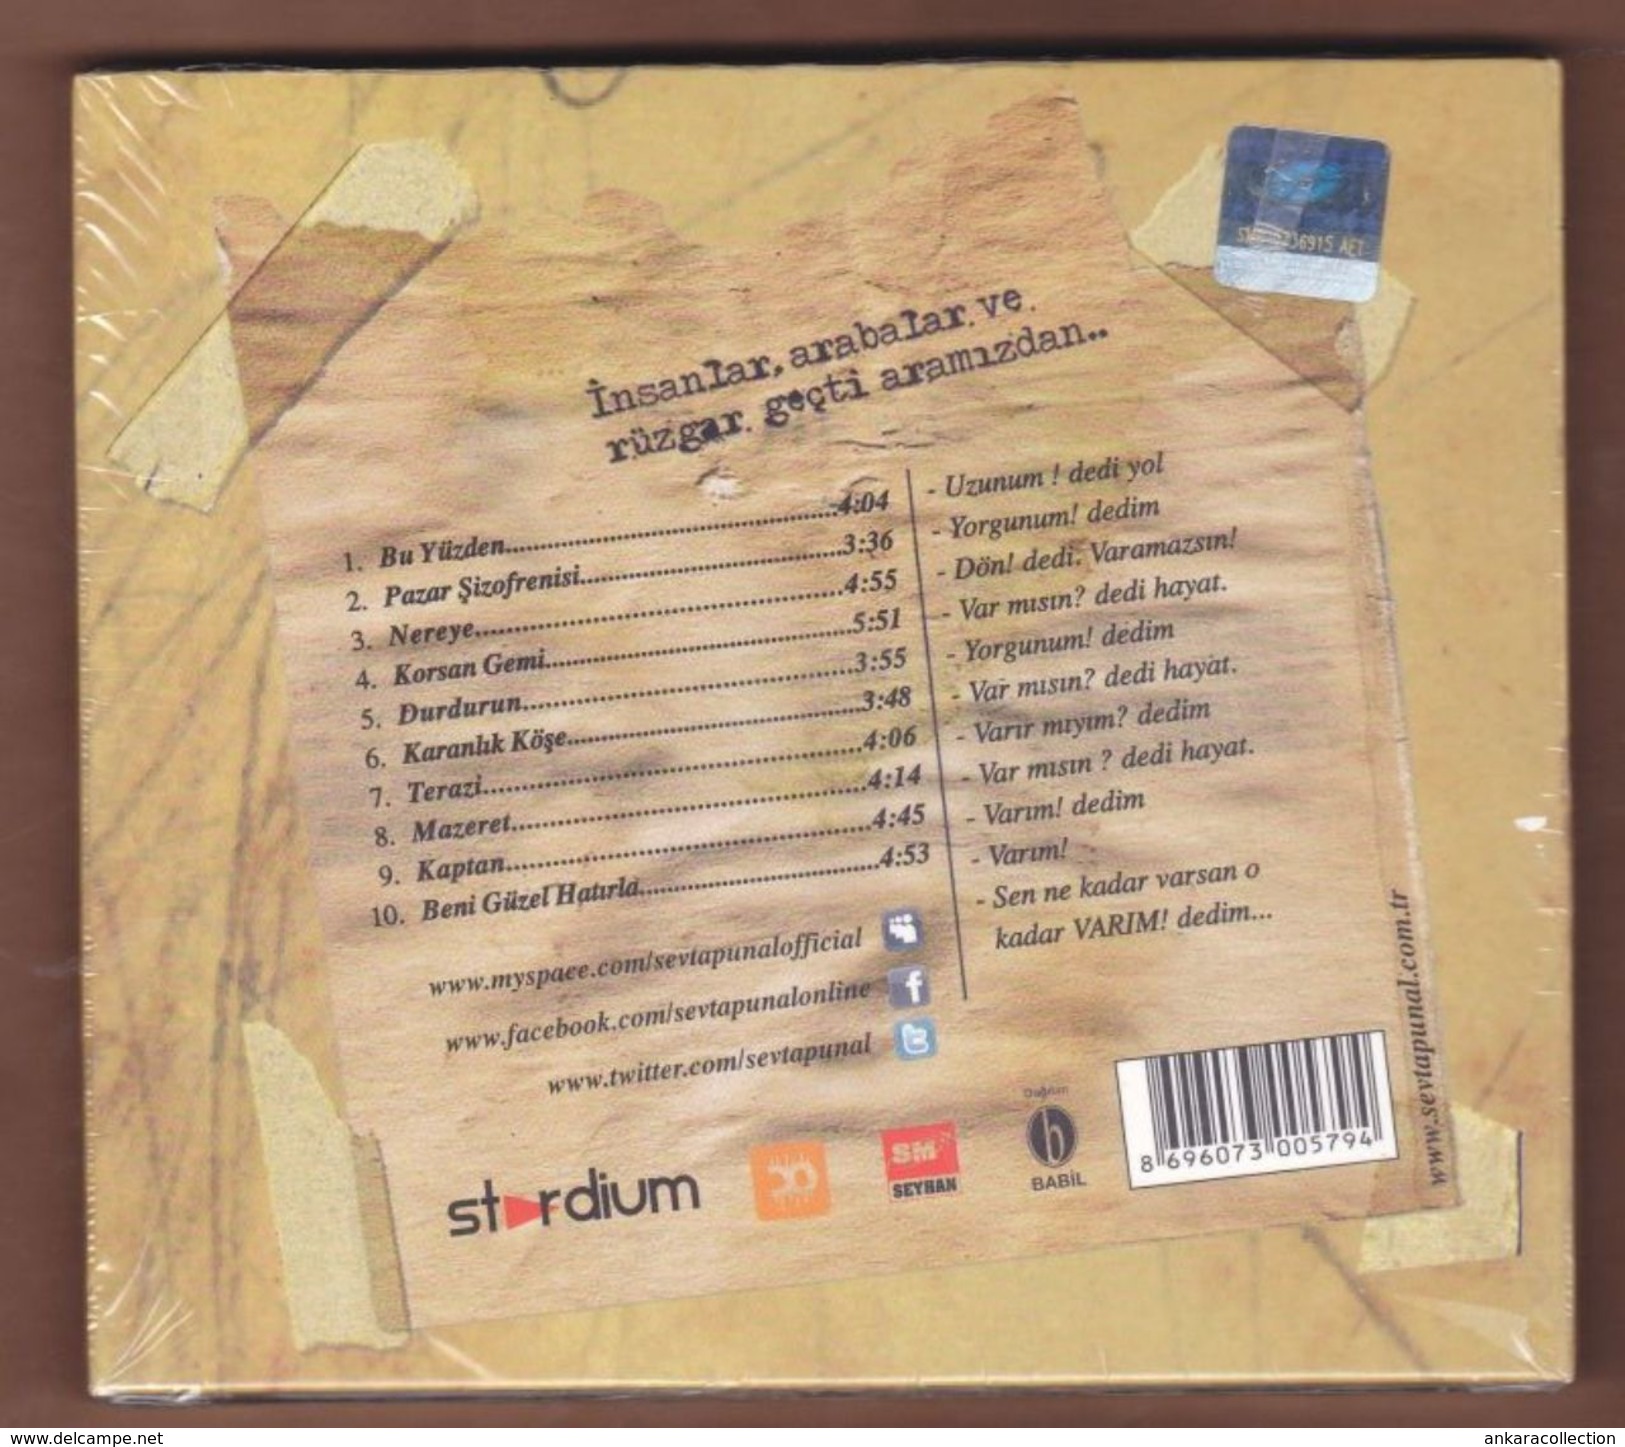 AC - Sevtap ünal Insanlar, Arabalar Ve Rüzgar Geçti Aramızdan BRAND NEW TURKISH MUSIC CD - World Music